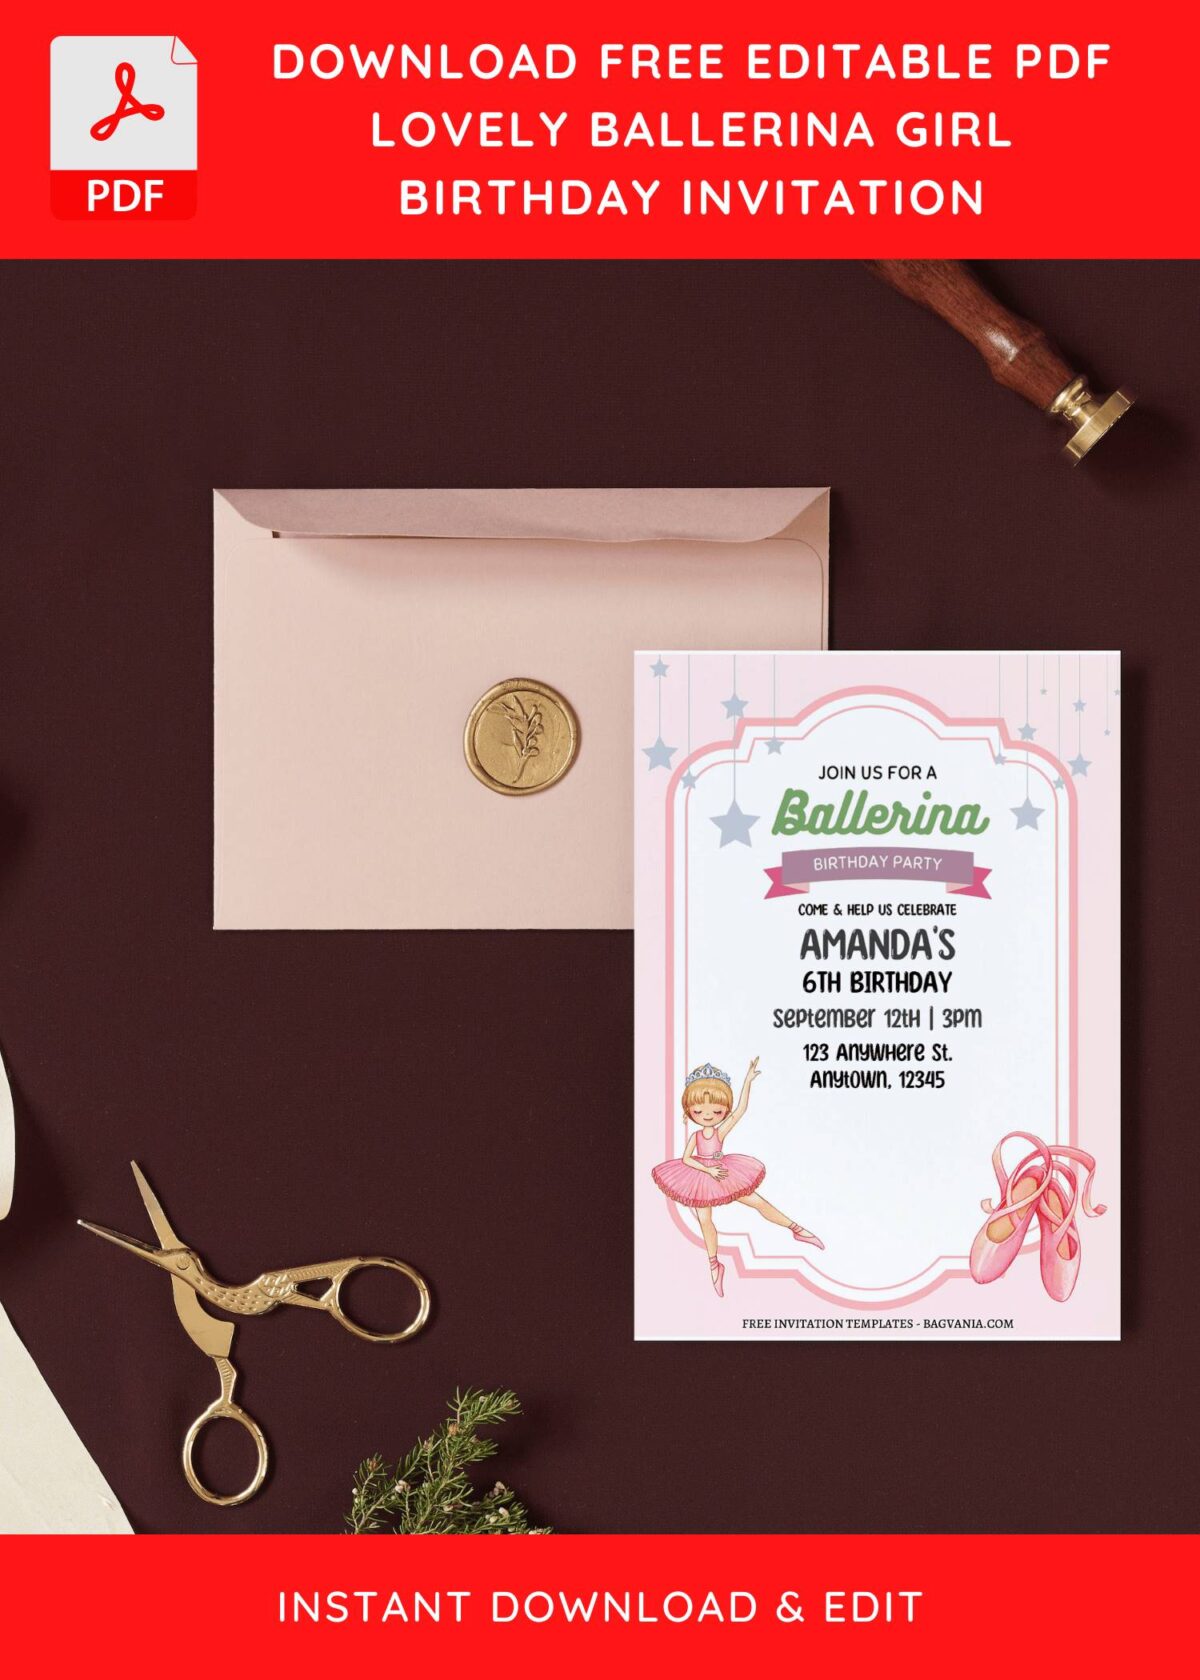 (Free Editable PDF) Graceful Ballerina Girls Birthday Invitation Templates I